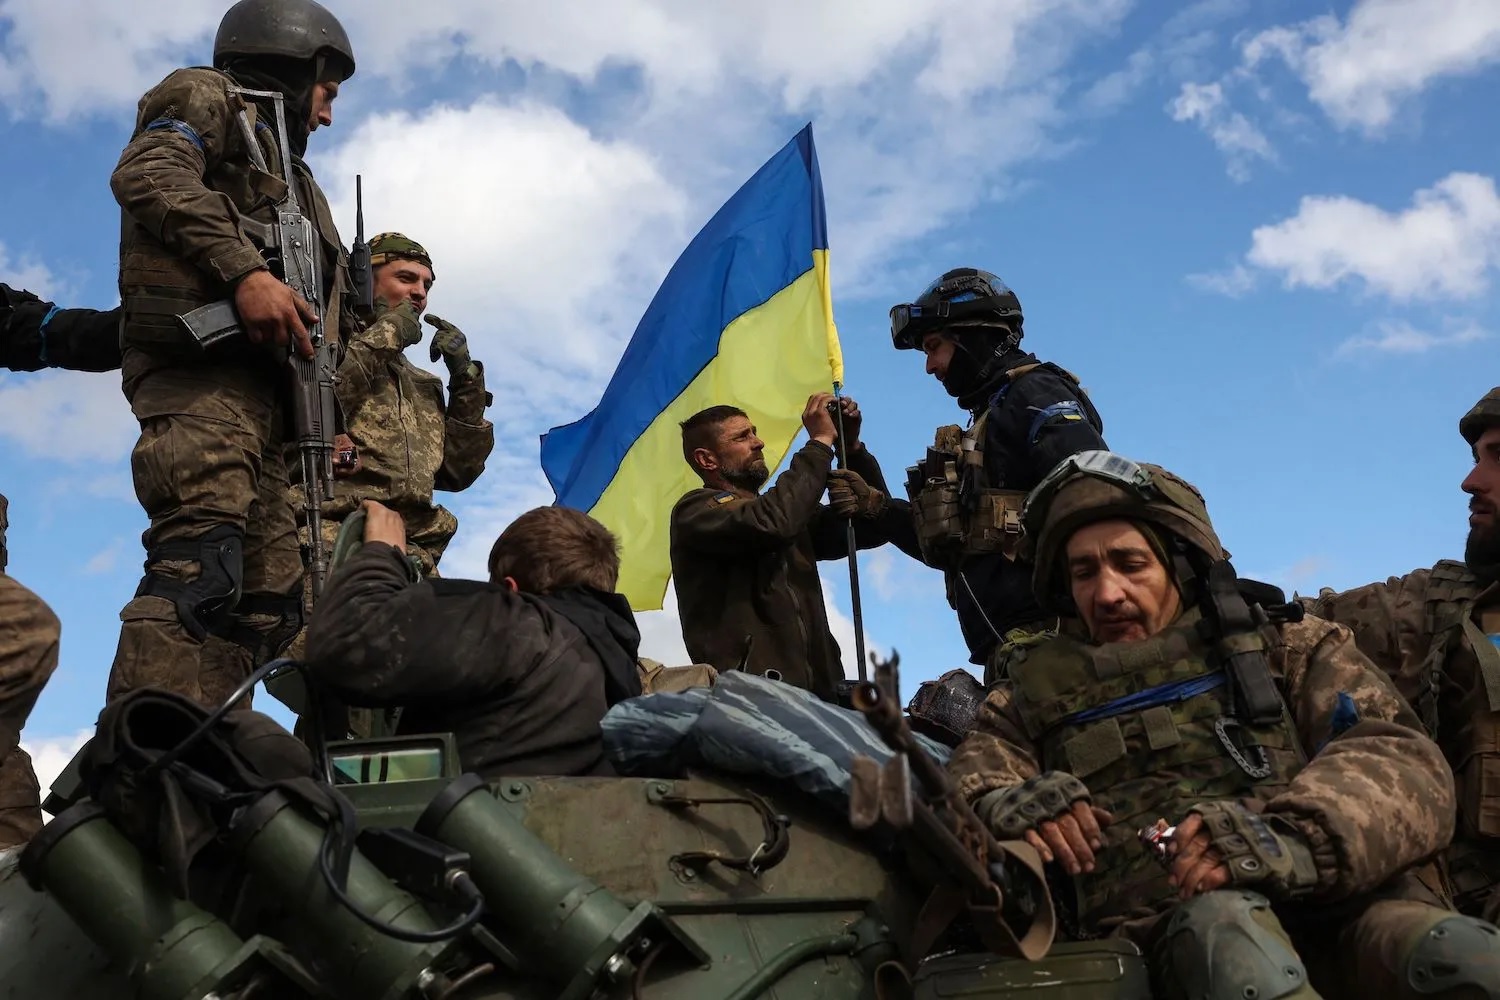 Ukrainian soldiers army